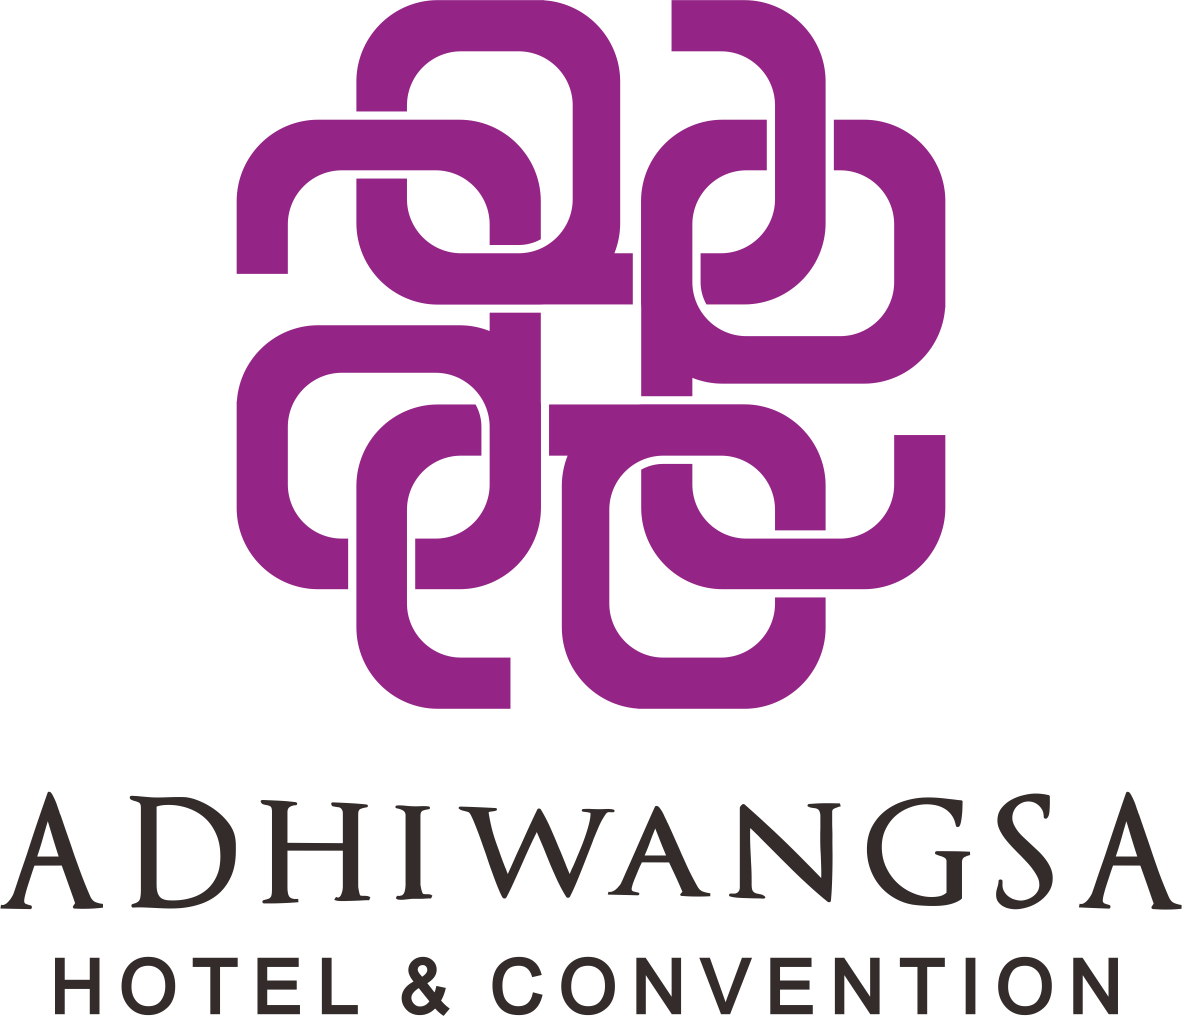 The Adhiwangsa Hotel